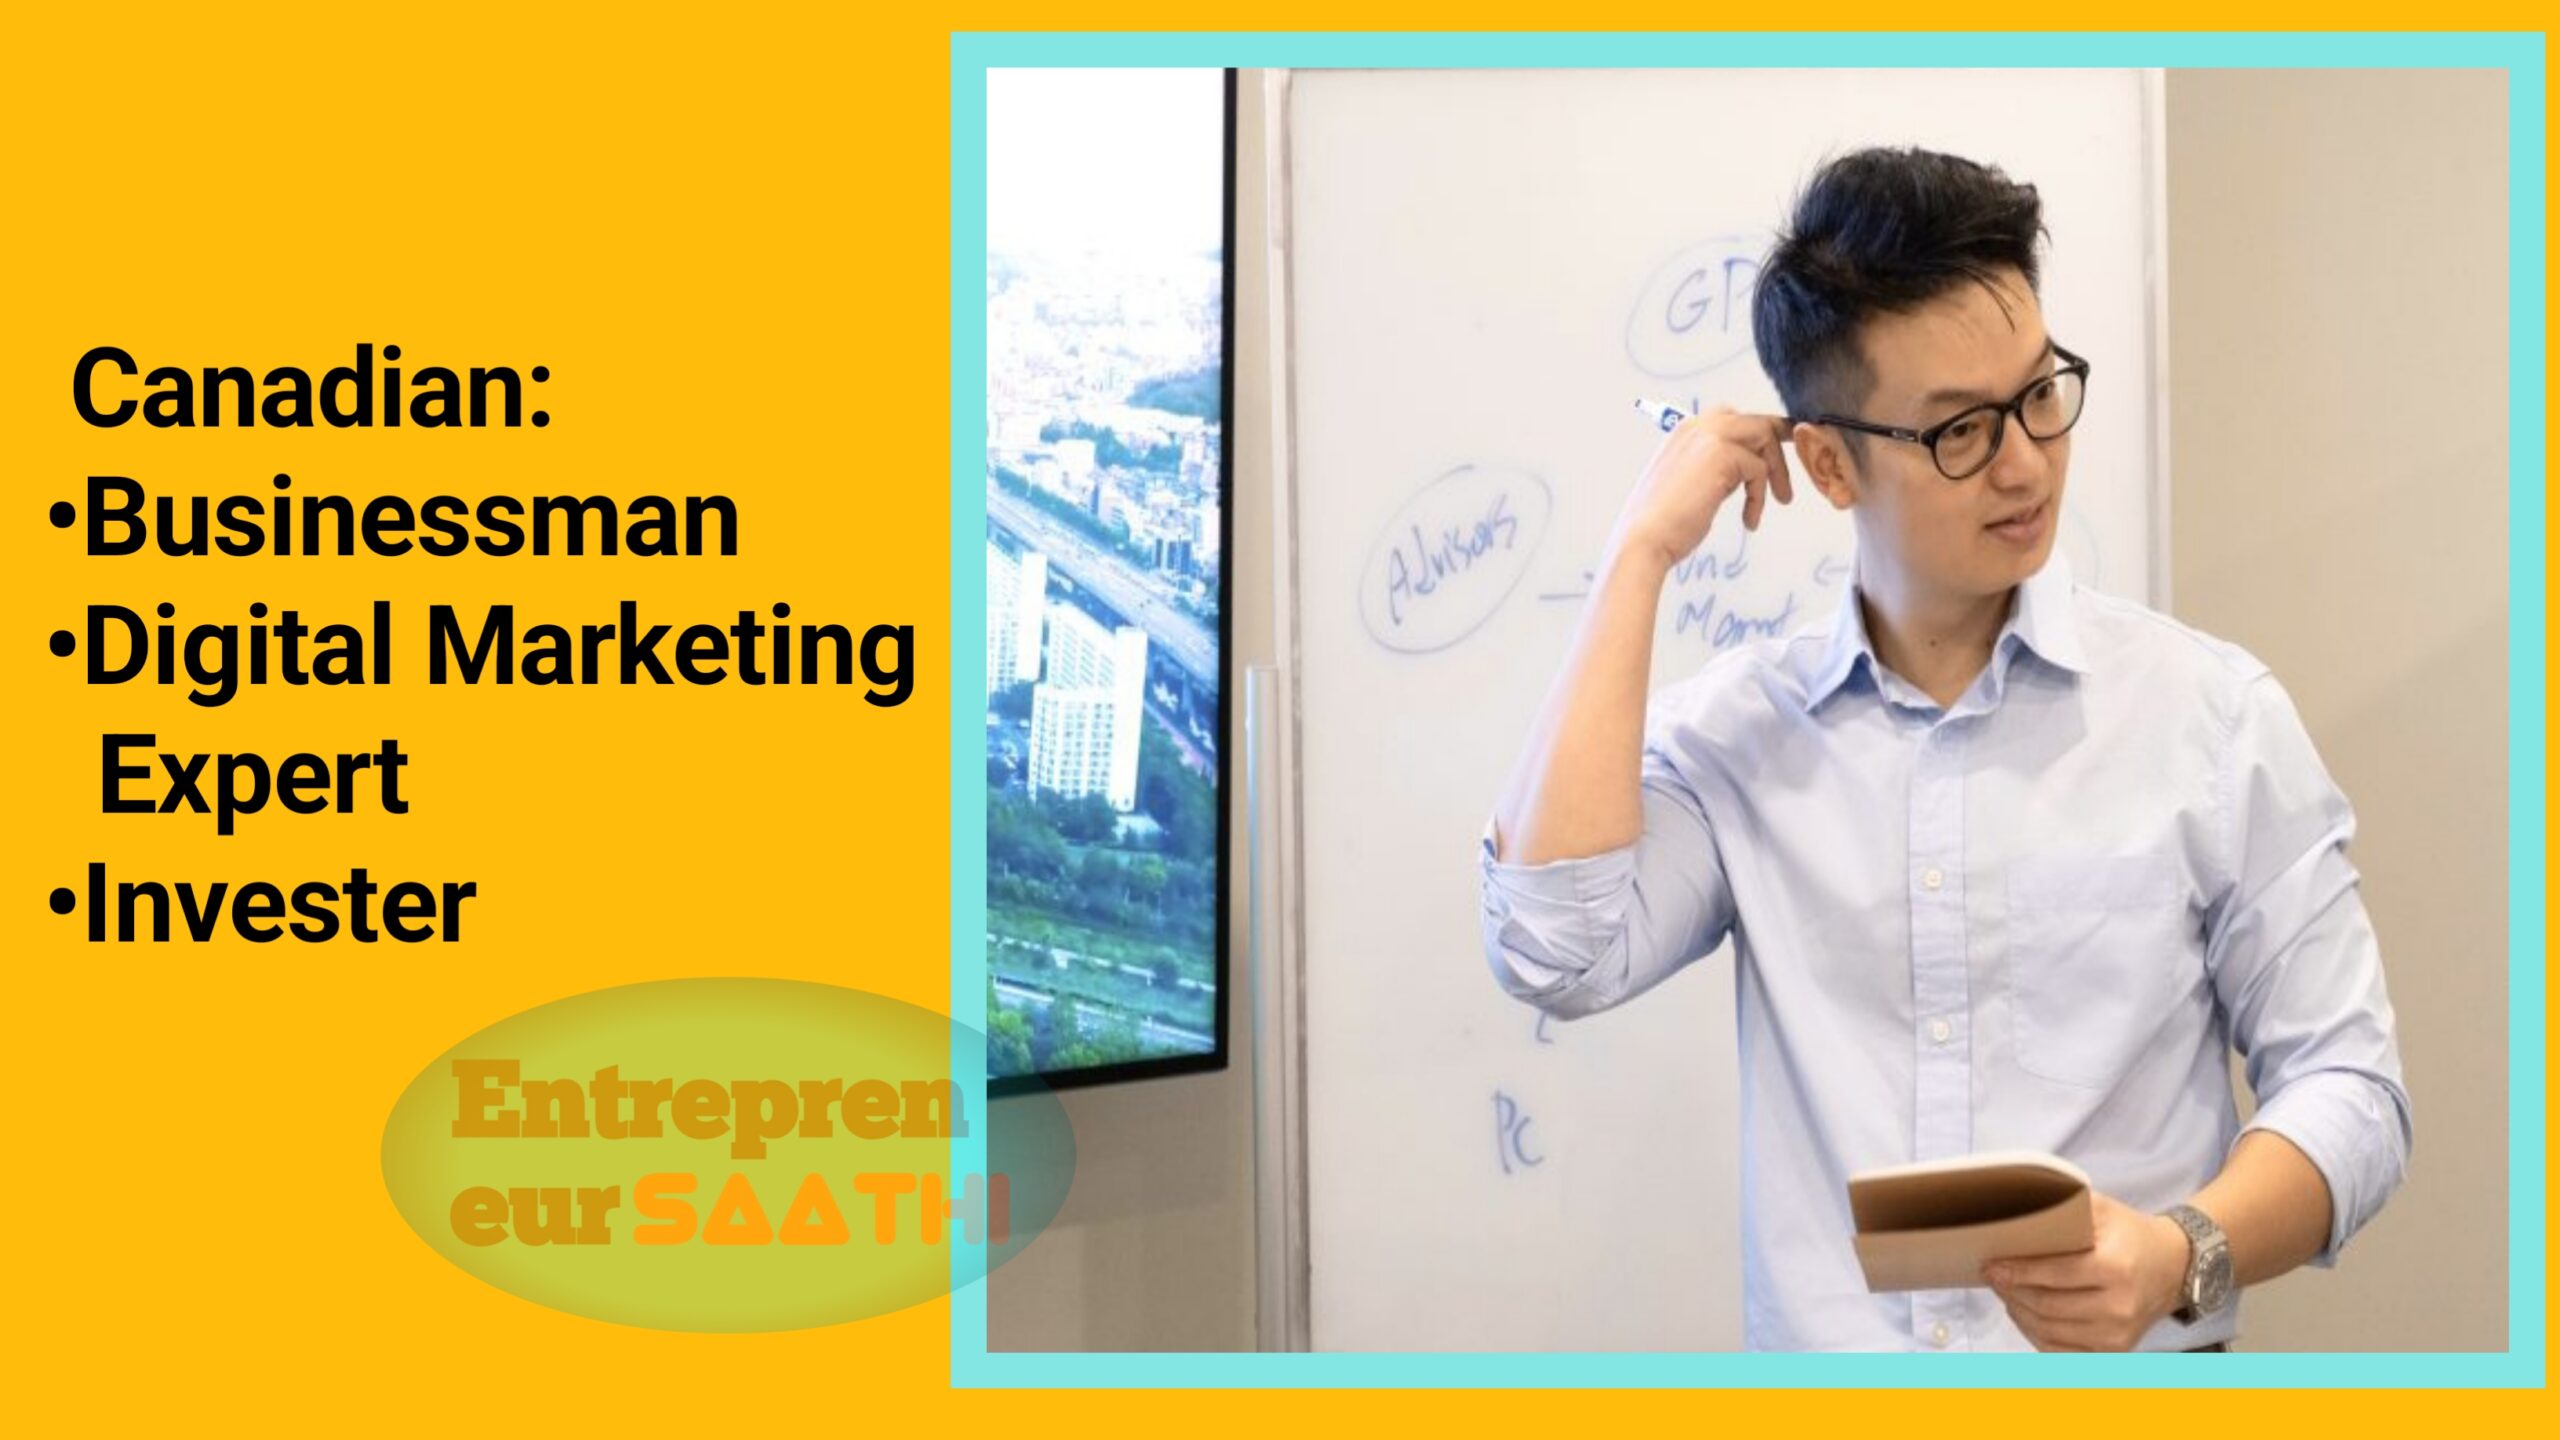 Wayne Liang Entrepreneur - Entrepreneur Saathi